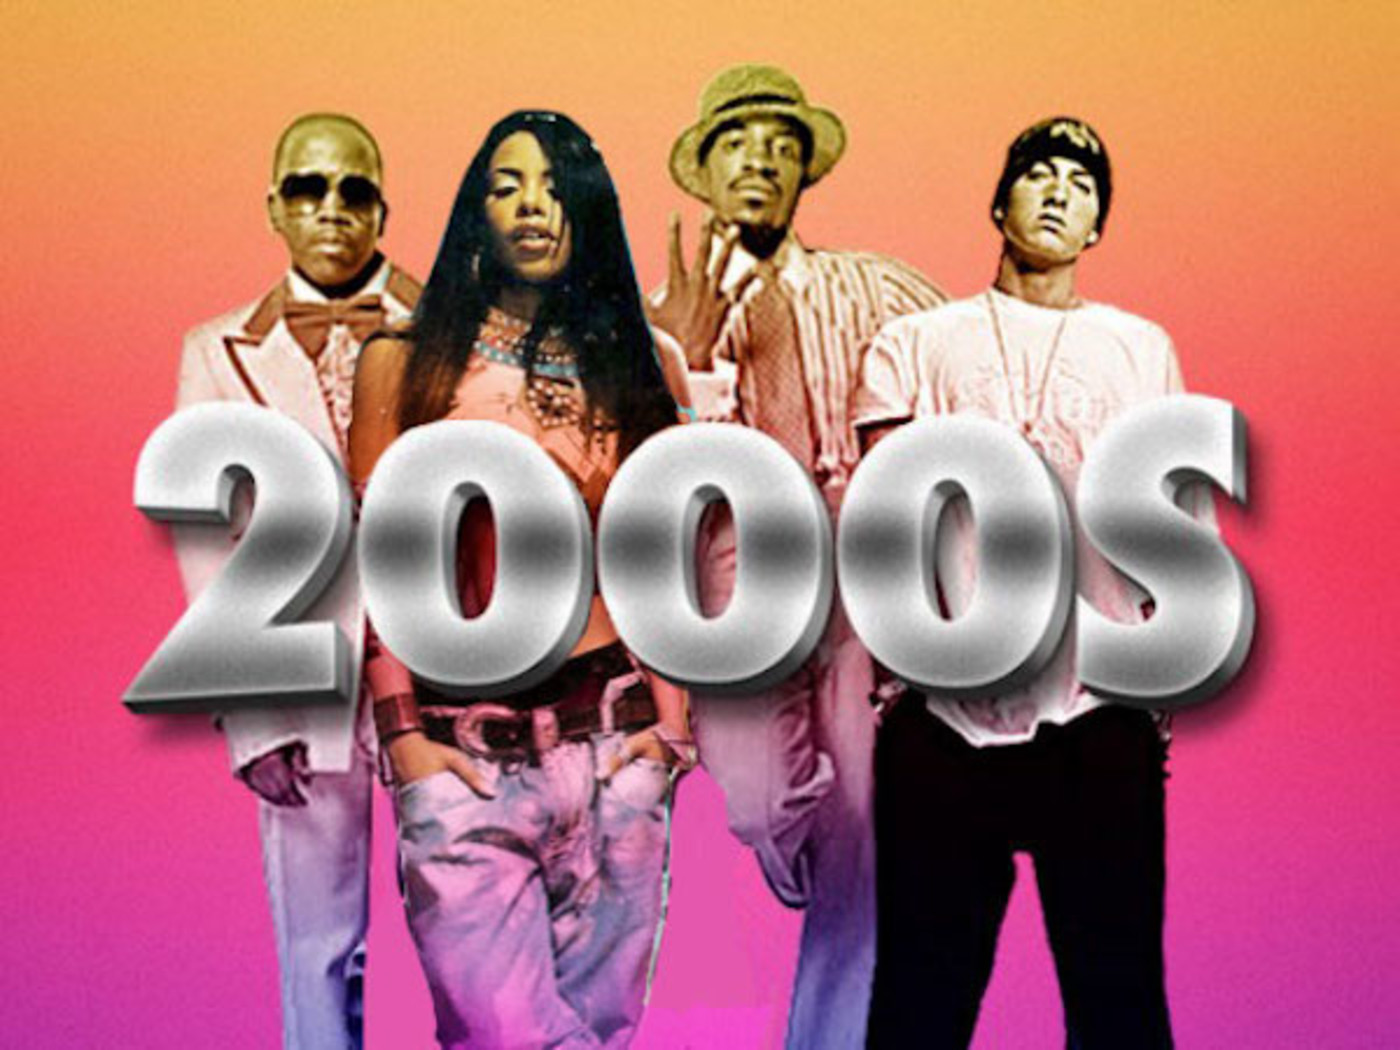 Песни 2000 года зарубежные слушать. S2000. 2000s Music. 2000s years. Pop Music 2000s.